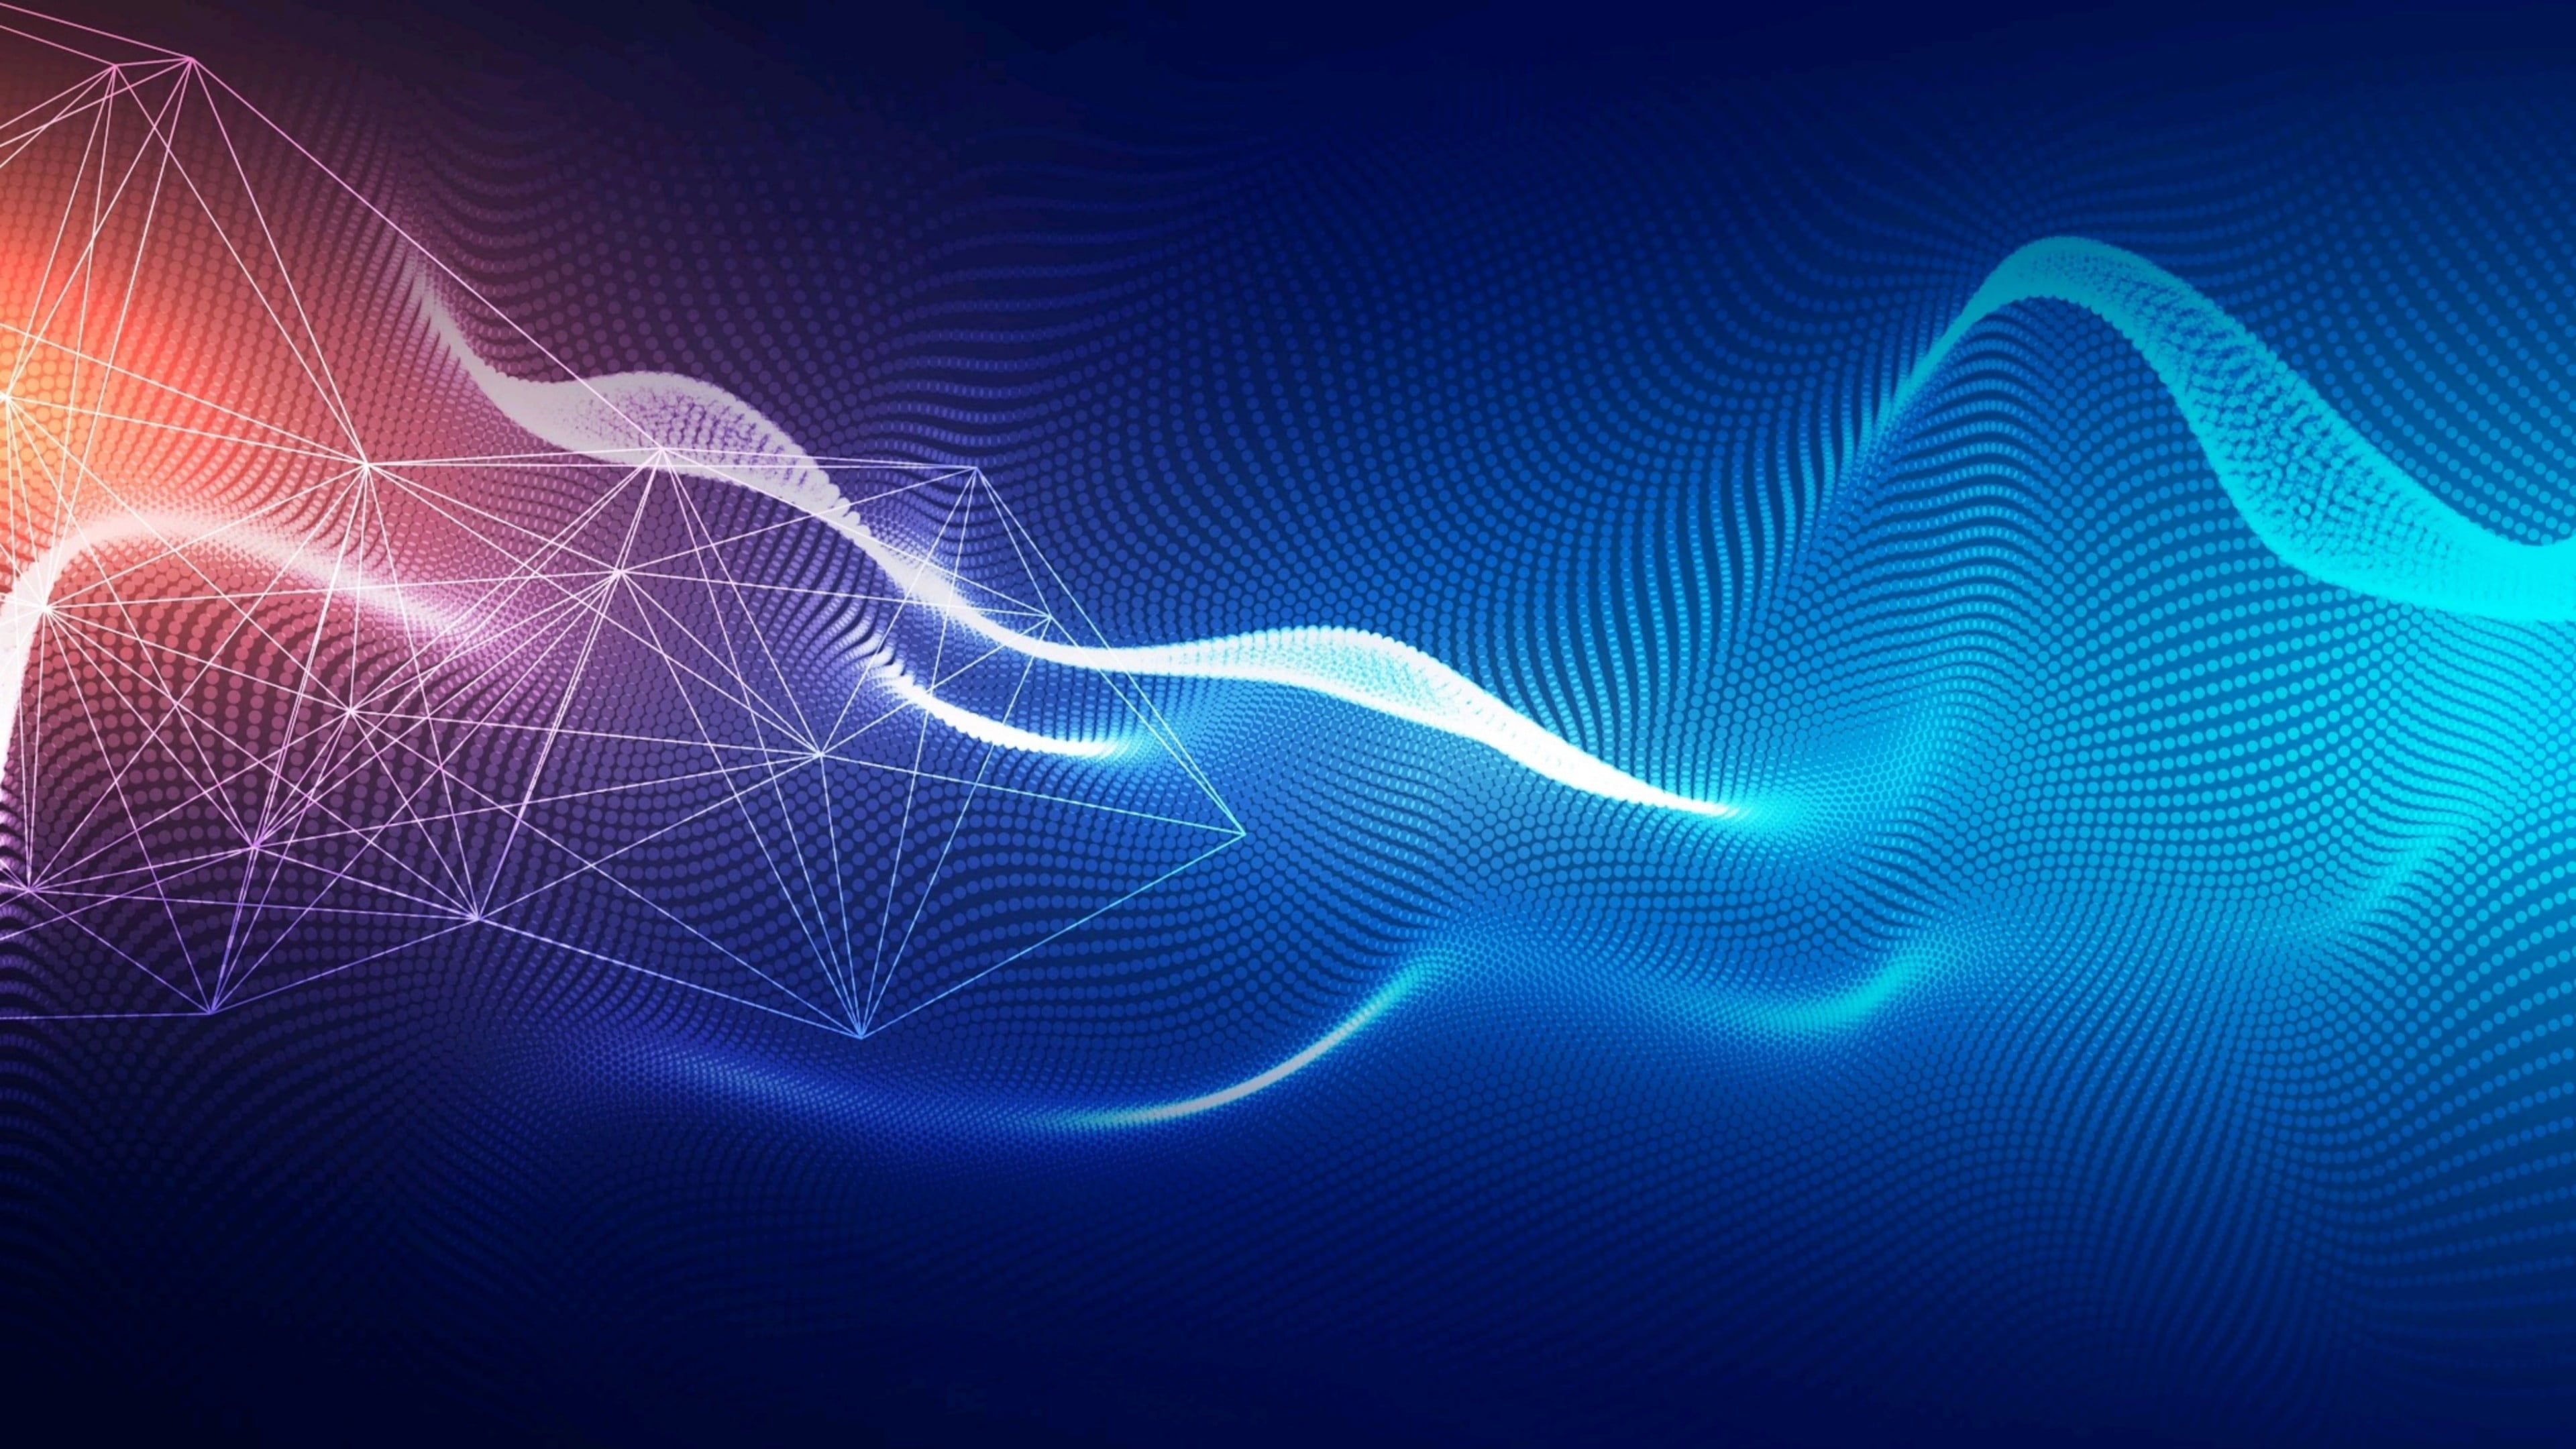 blue #light electric blue #connection #line #sky #graphics fractal art #technology #energy #net #wave #mesh K. HD wallpaper, 3440x1440 wallpaper, Fractal art